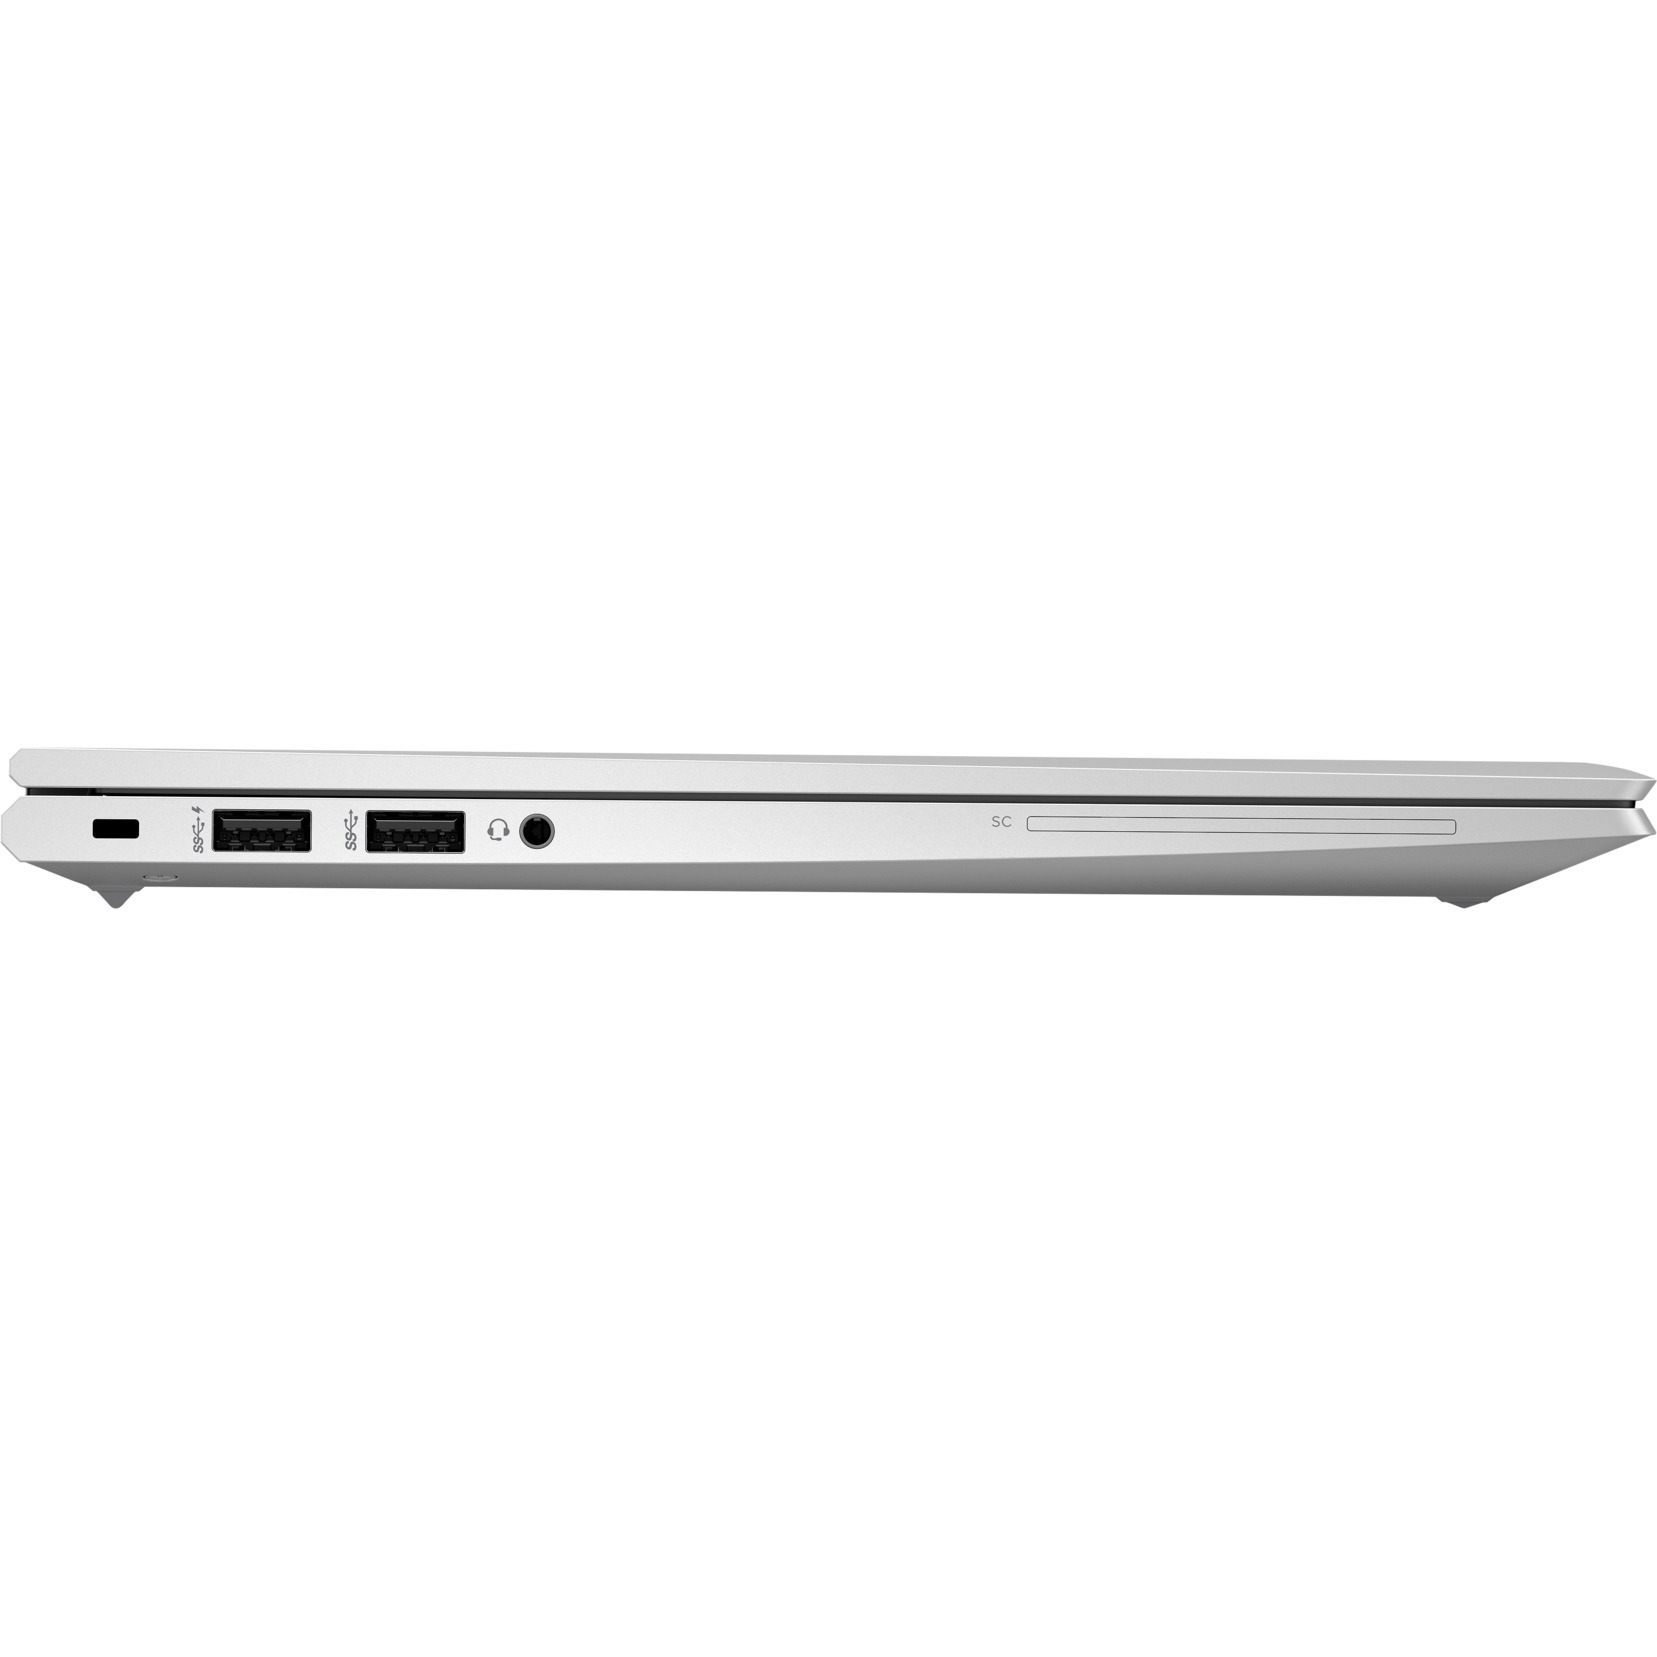 Graden Celsius Skalk Meer dan wat dan ook HP EliteBook 845 G7 14" Notebook - Full HD - 1920 x 1080 - AMD Ryzen 7 PRO  4750U Octa-core (8 Core) 1.70 GHz - 16 GB RAM - 256 GB SSD 385A1US#ABA:  Notebooks - COLAMCO.com